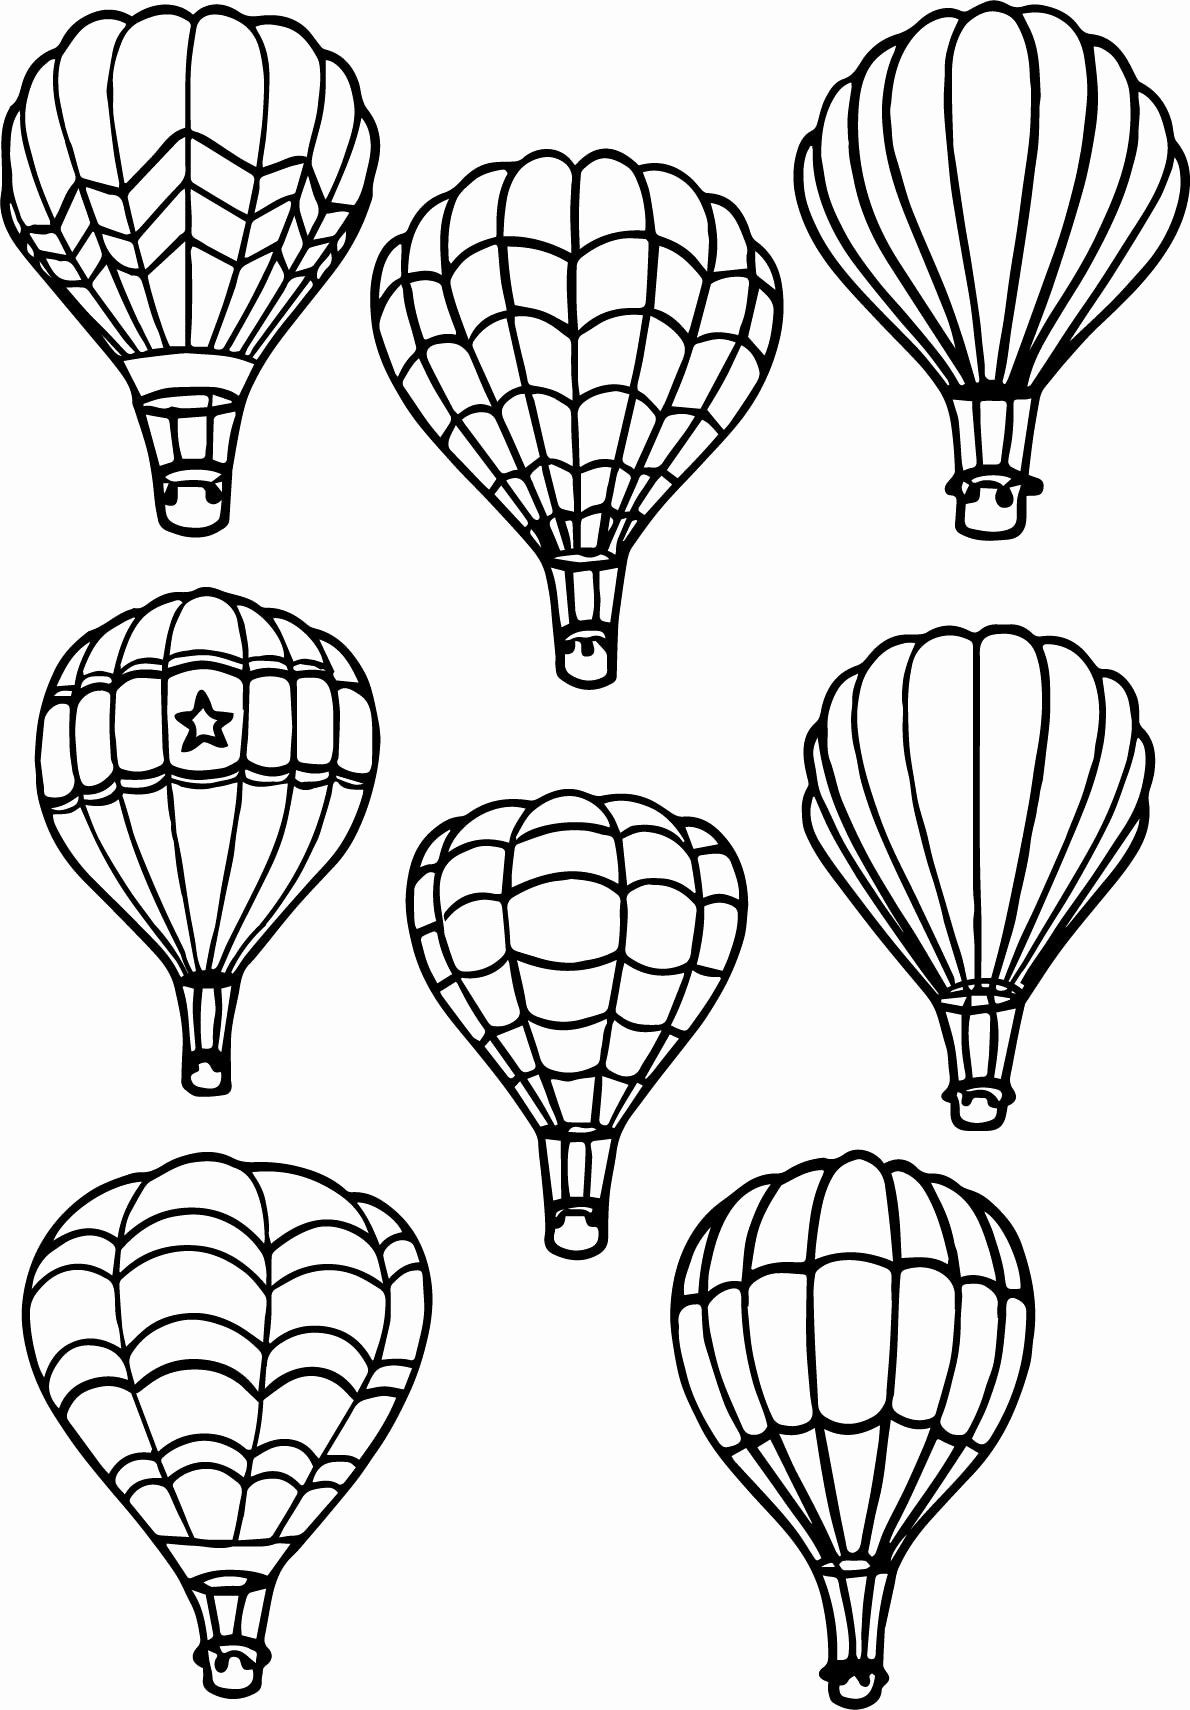 Hot Air Balloon Coloring Page Fresh All Air Balloon Coloring Page | Hot